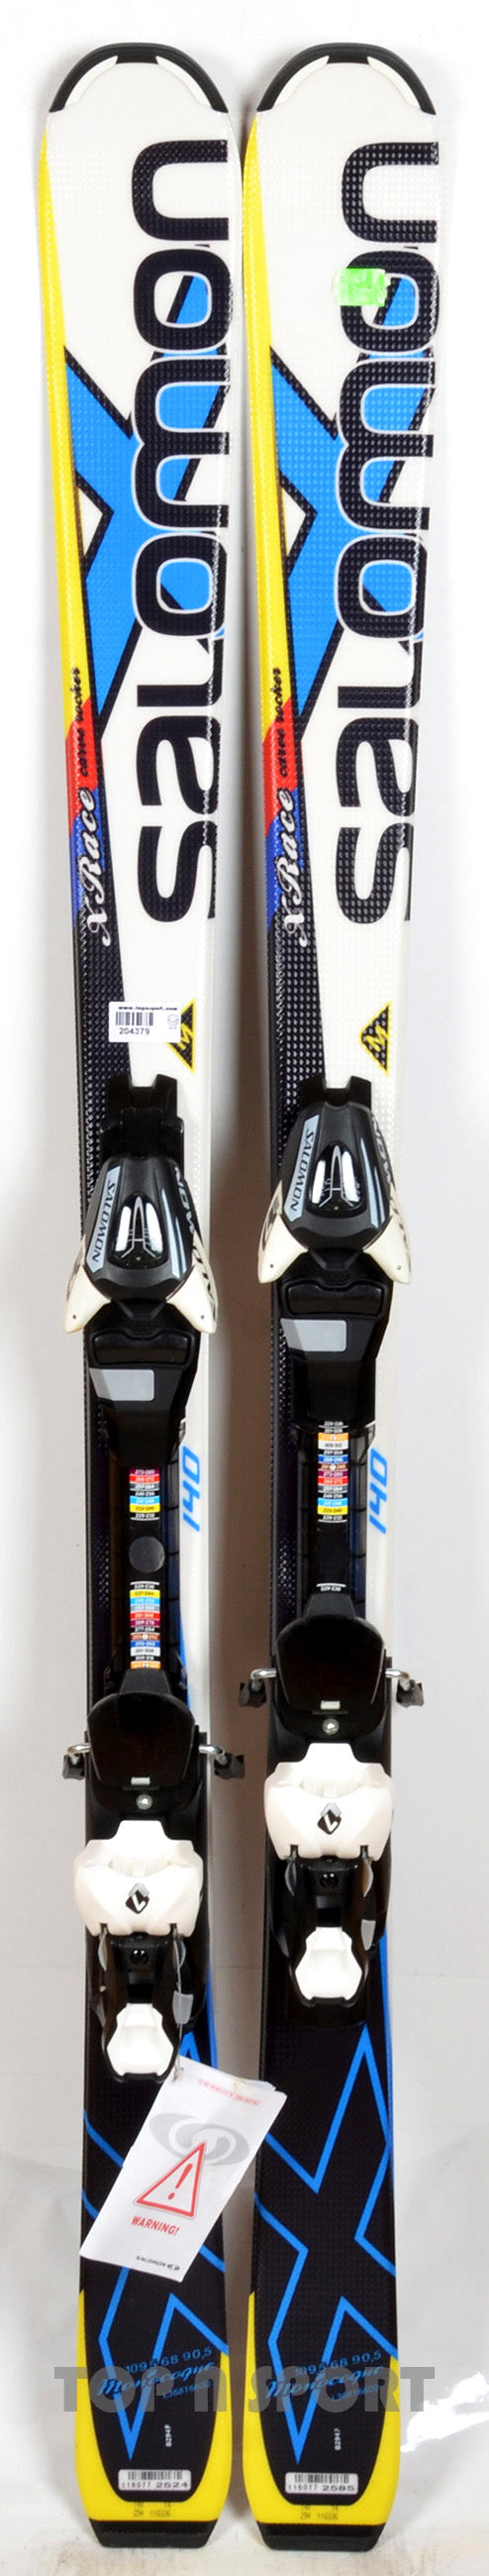 Pack neuf skis Salomon X-RACE JR avec fixations - neuf déstockage